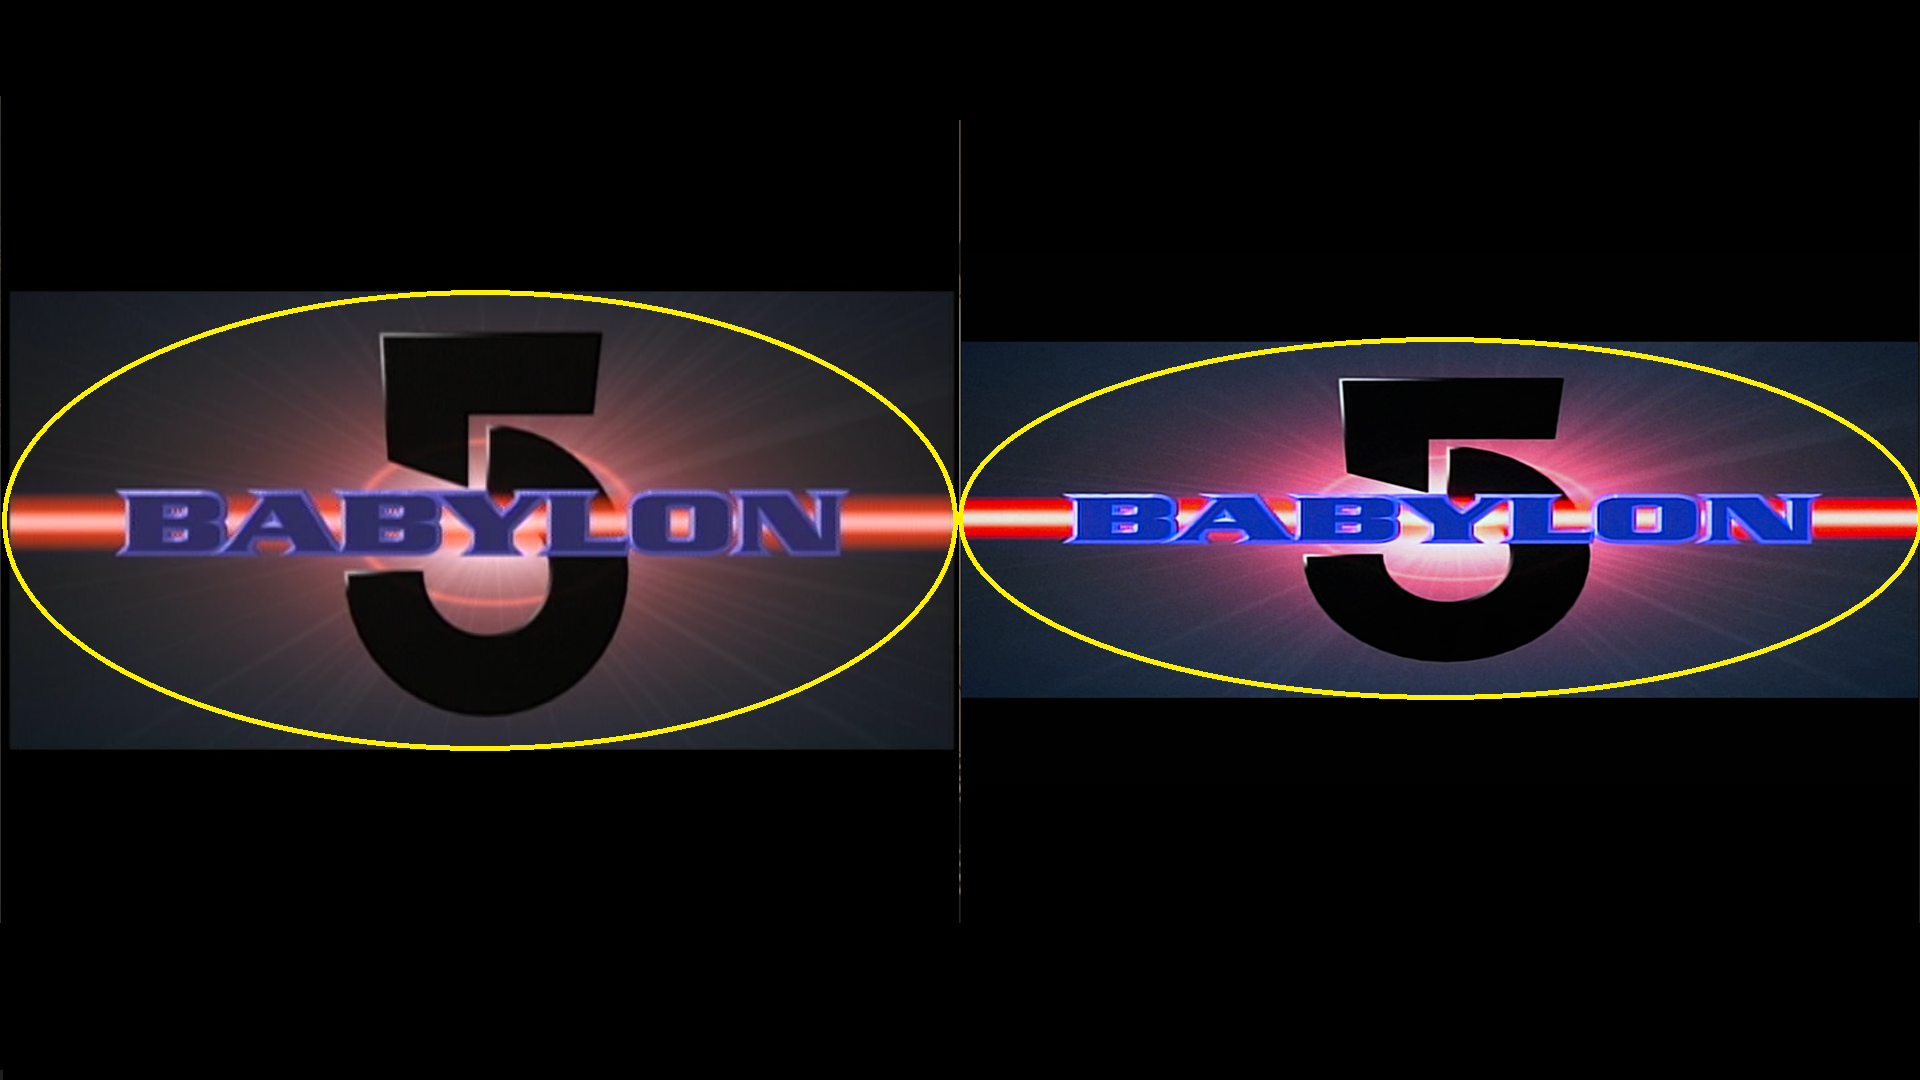 Babylon 5: In The Beginning Wallpapers